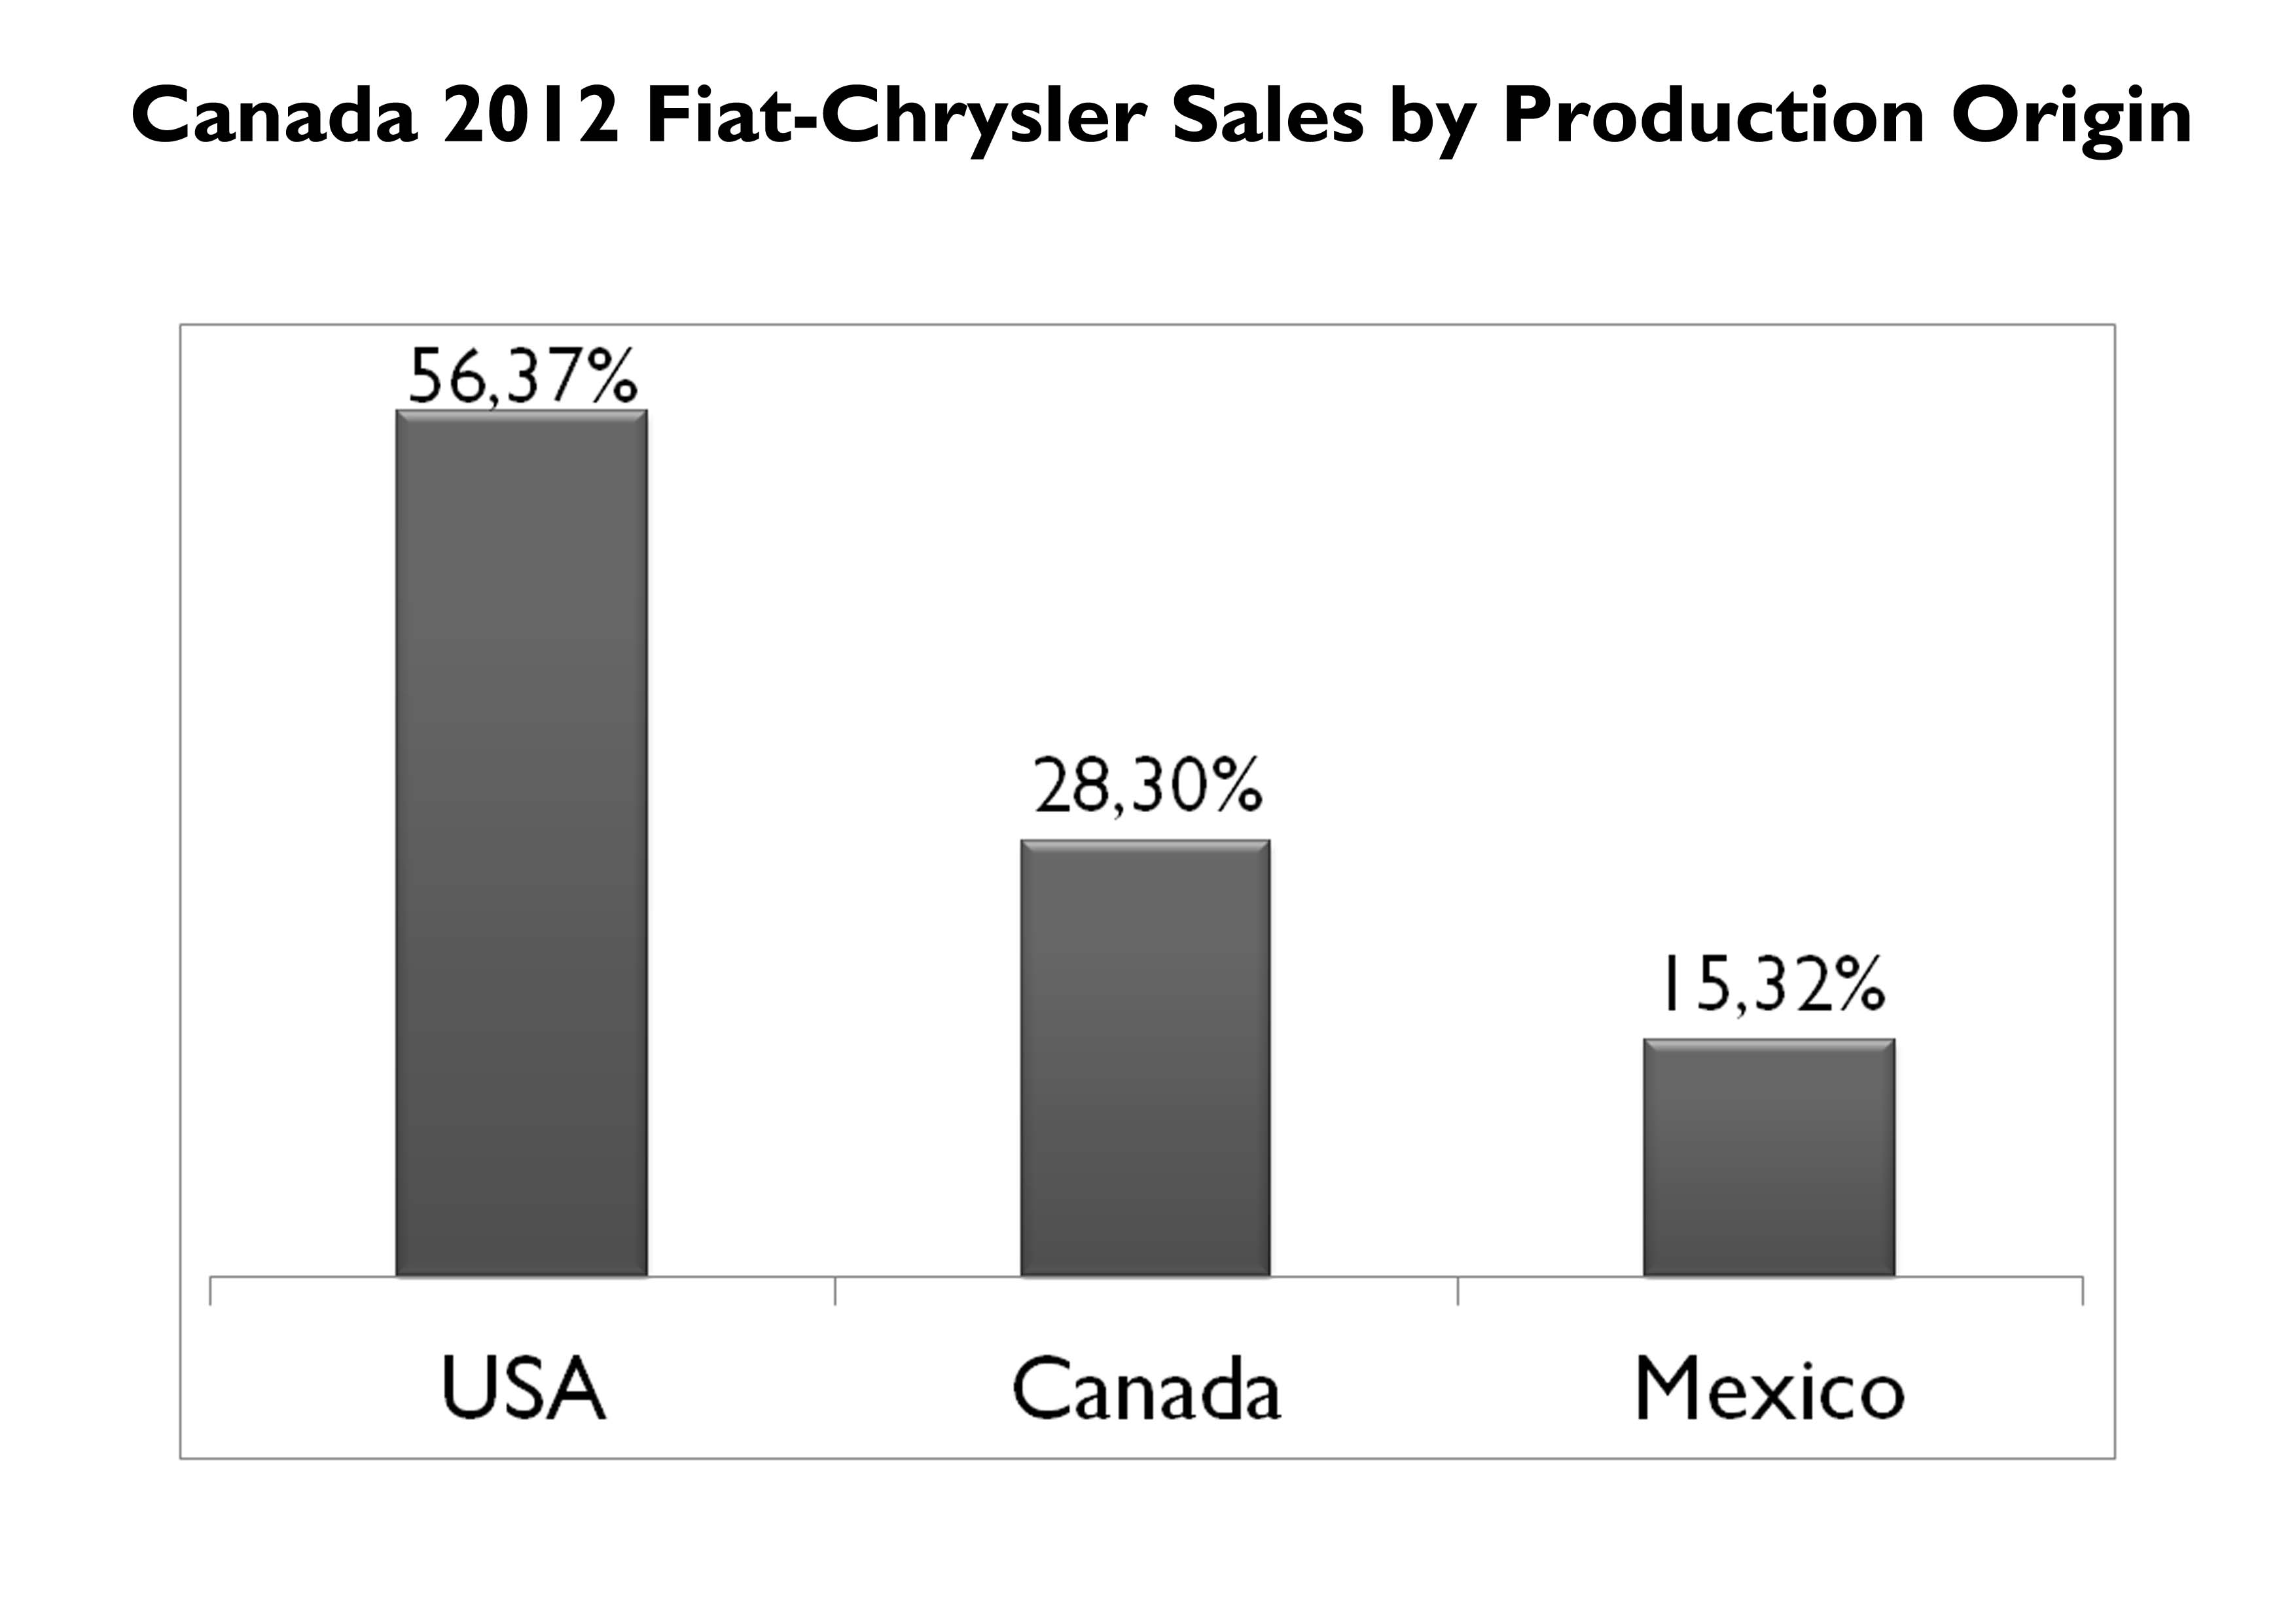 Chrysler total sales